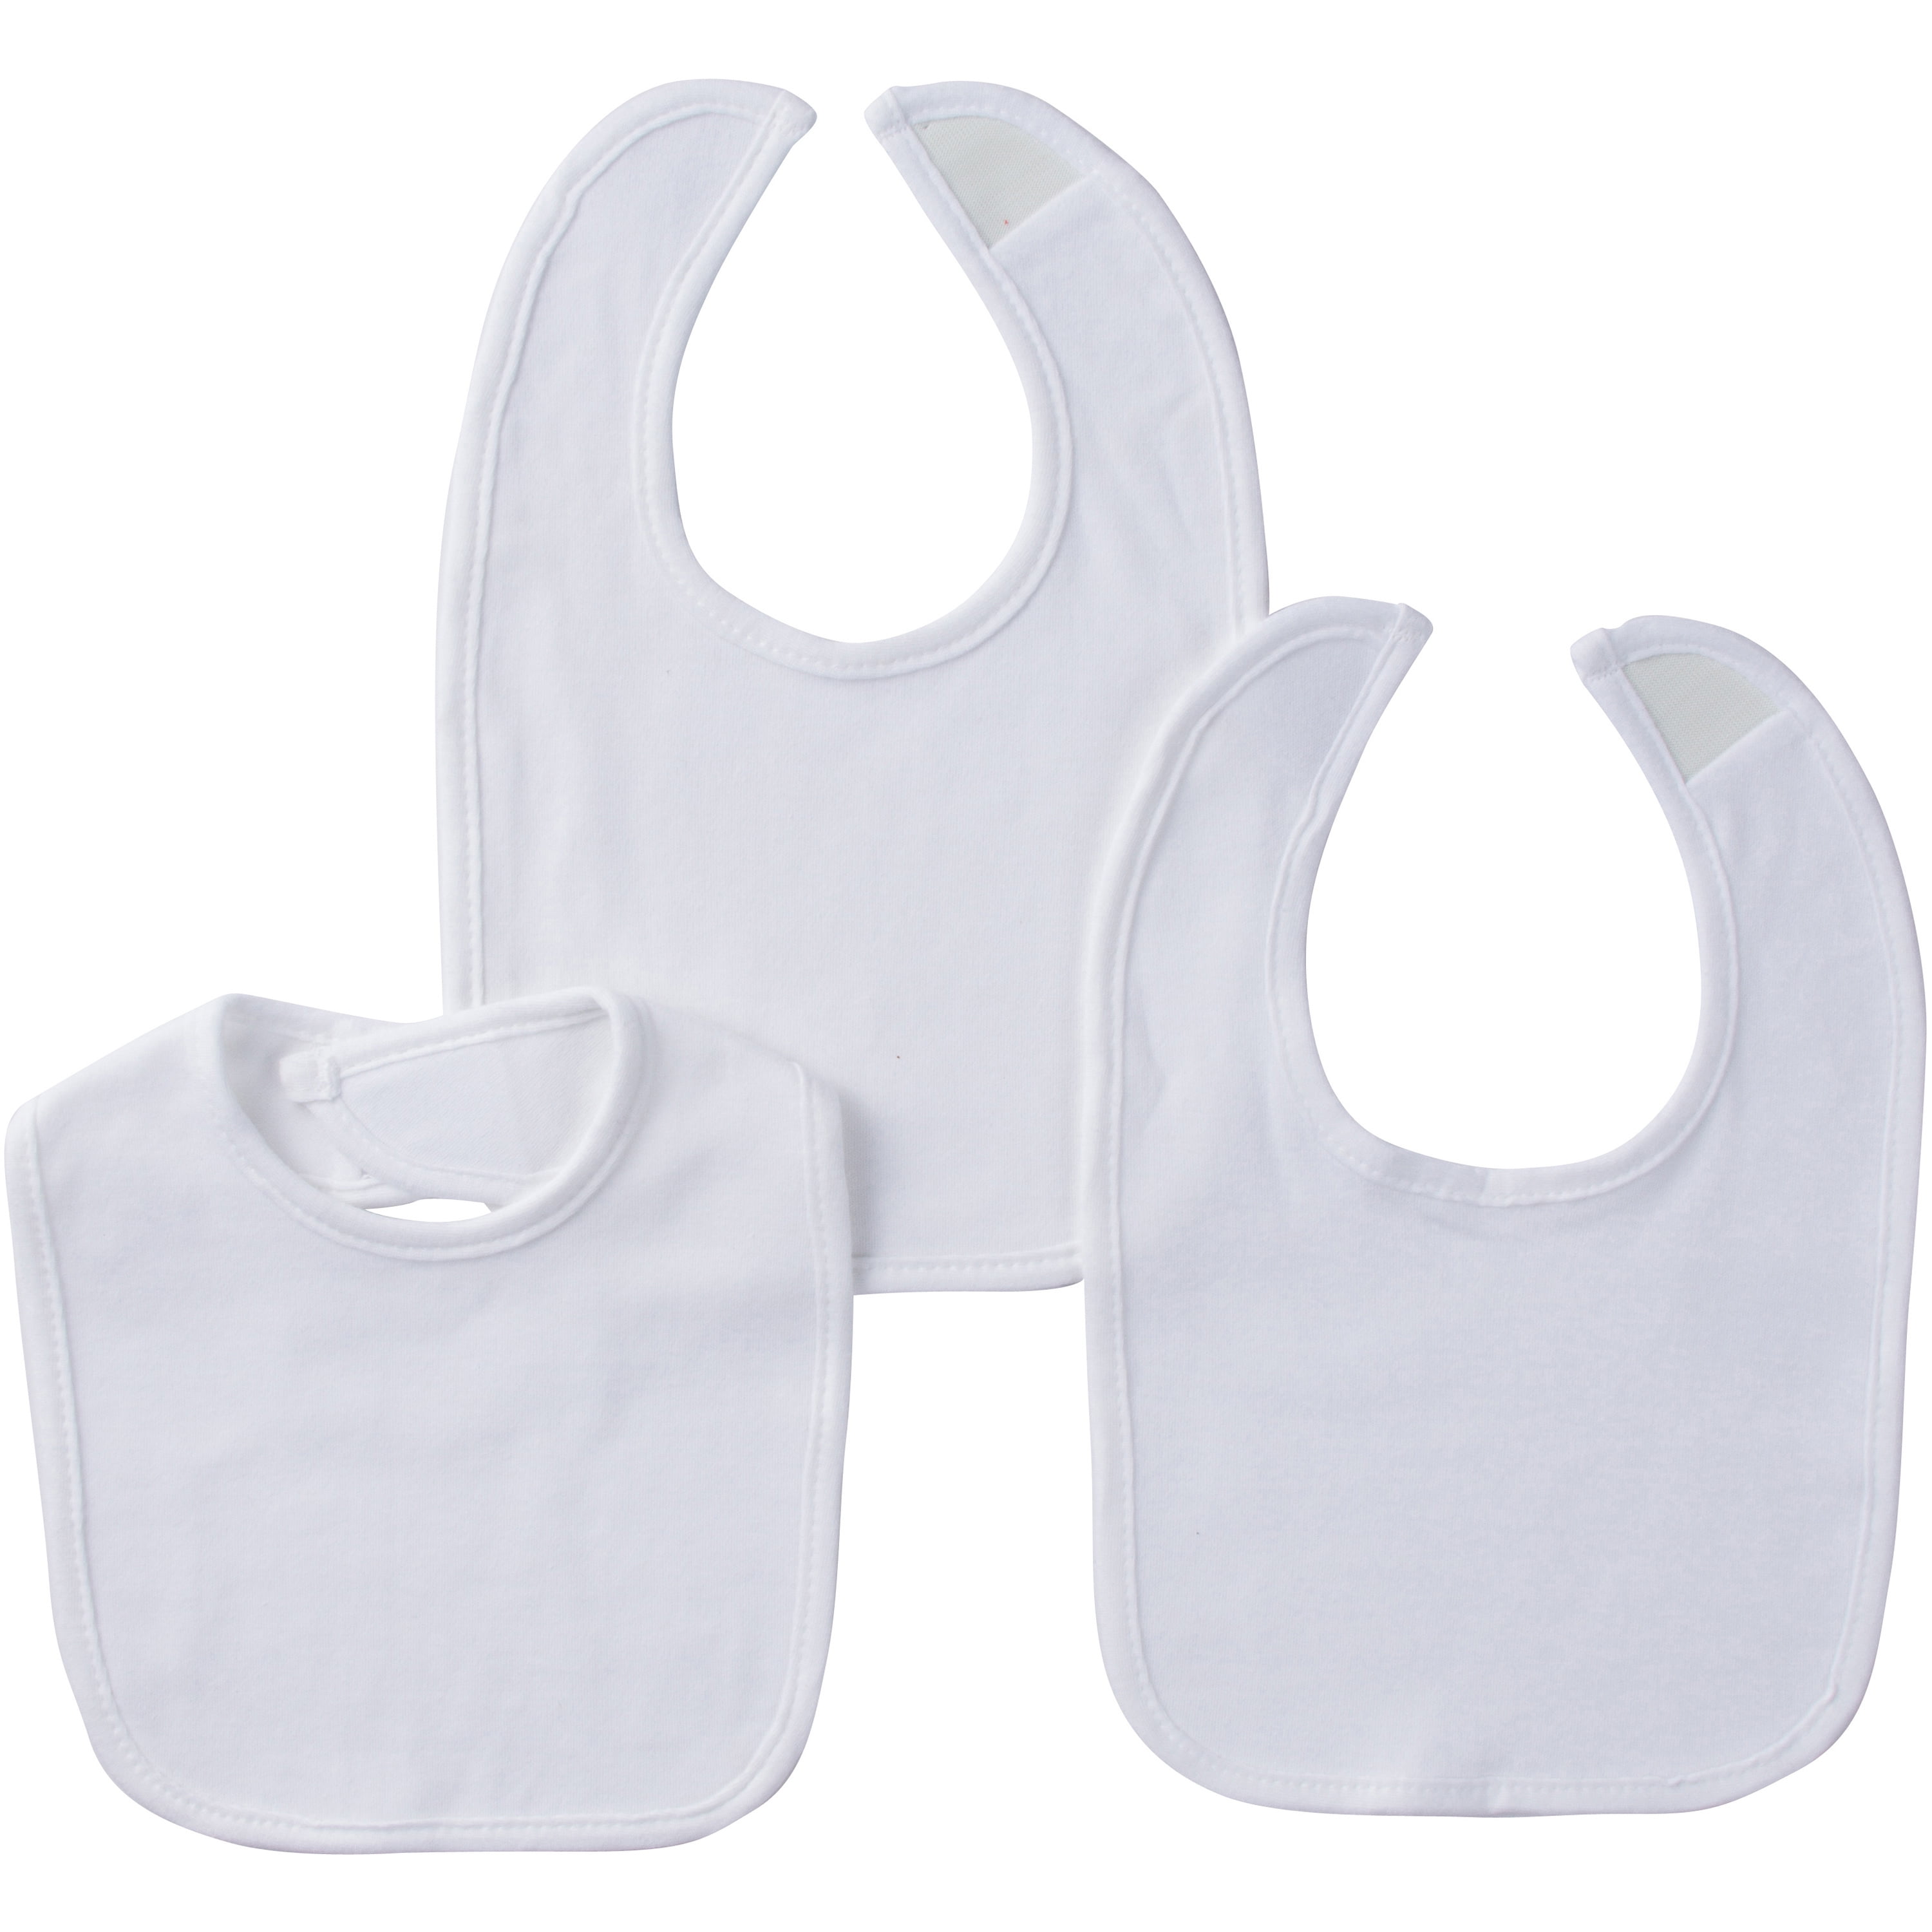 Terry Cloth Baby Bib Set Solid White Pack Of 10 Bibs Feeding Baby Shower Decor 